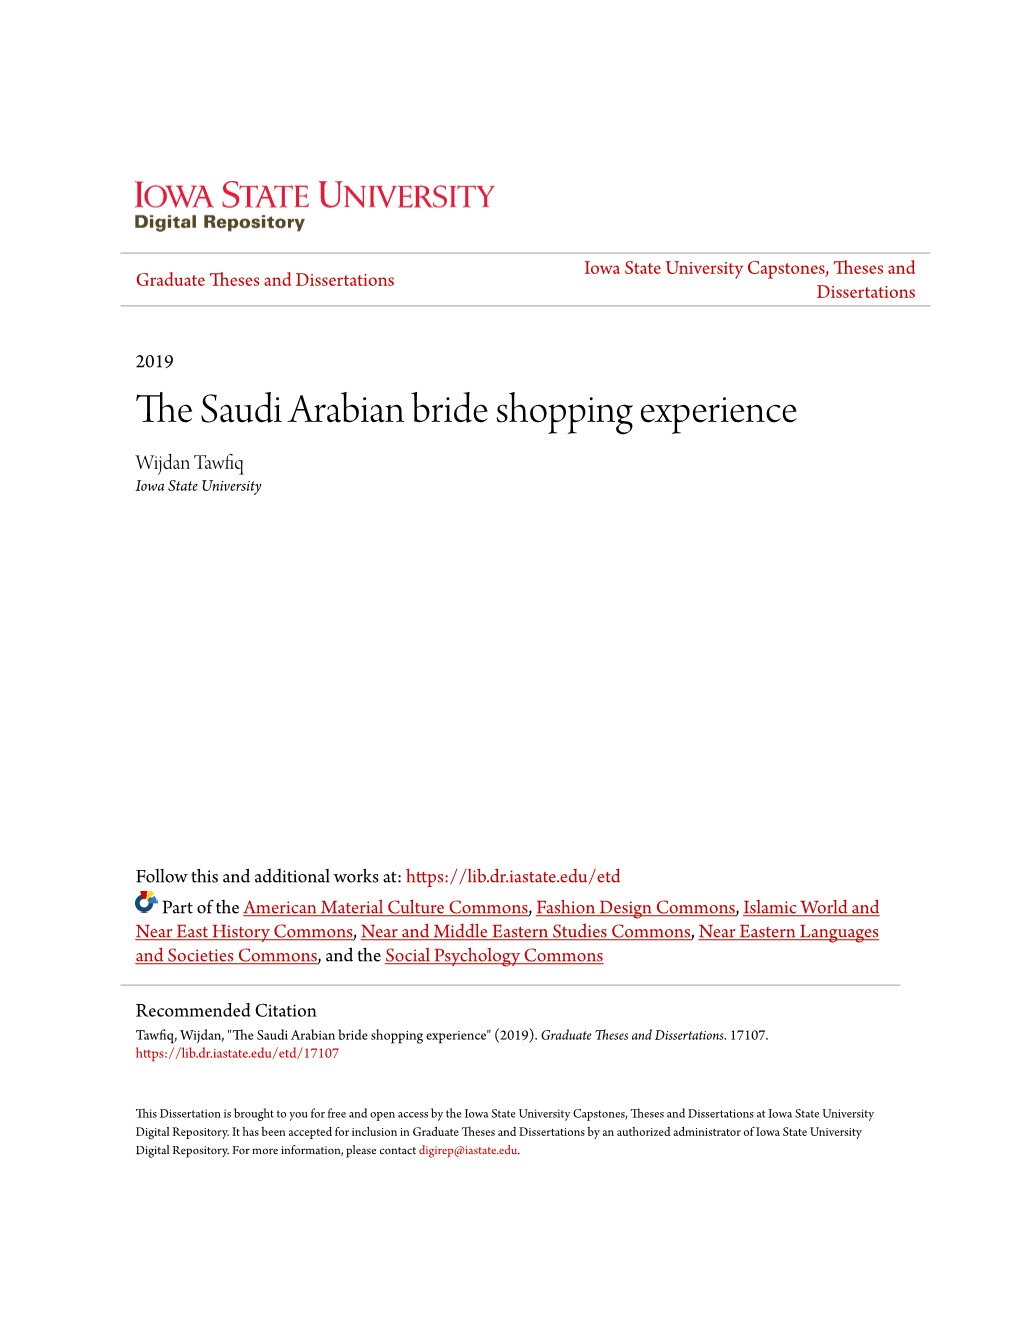 The Saudi Arabian Bride Shopping Experience